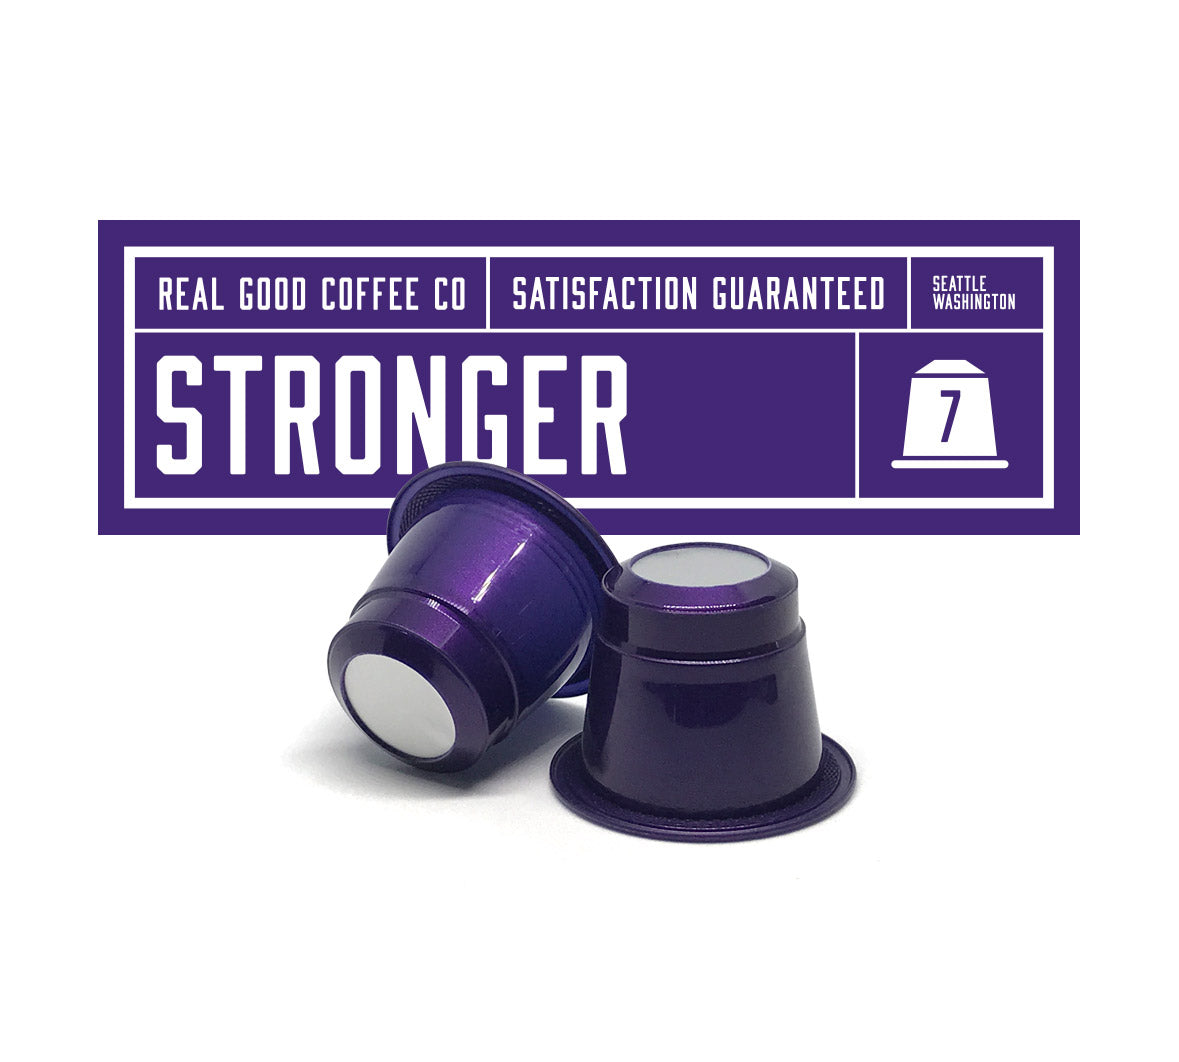 Stronger Nespresso Compatible Pods